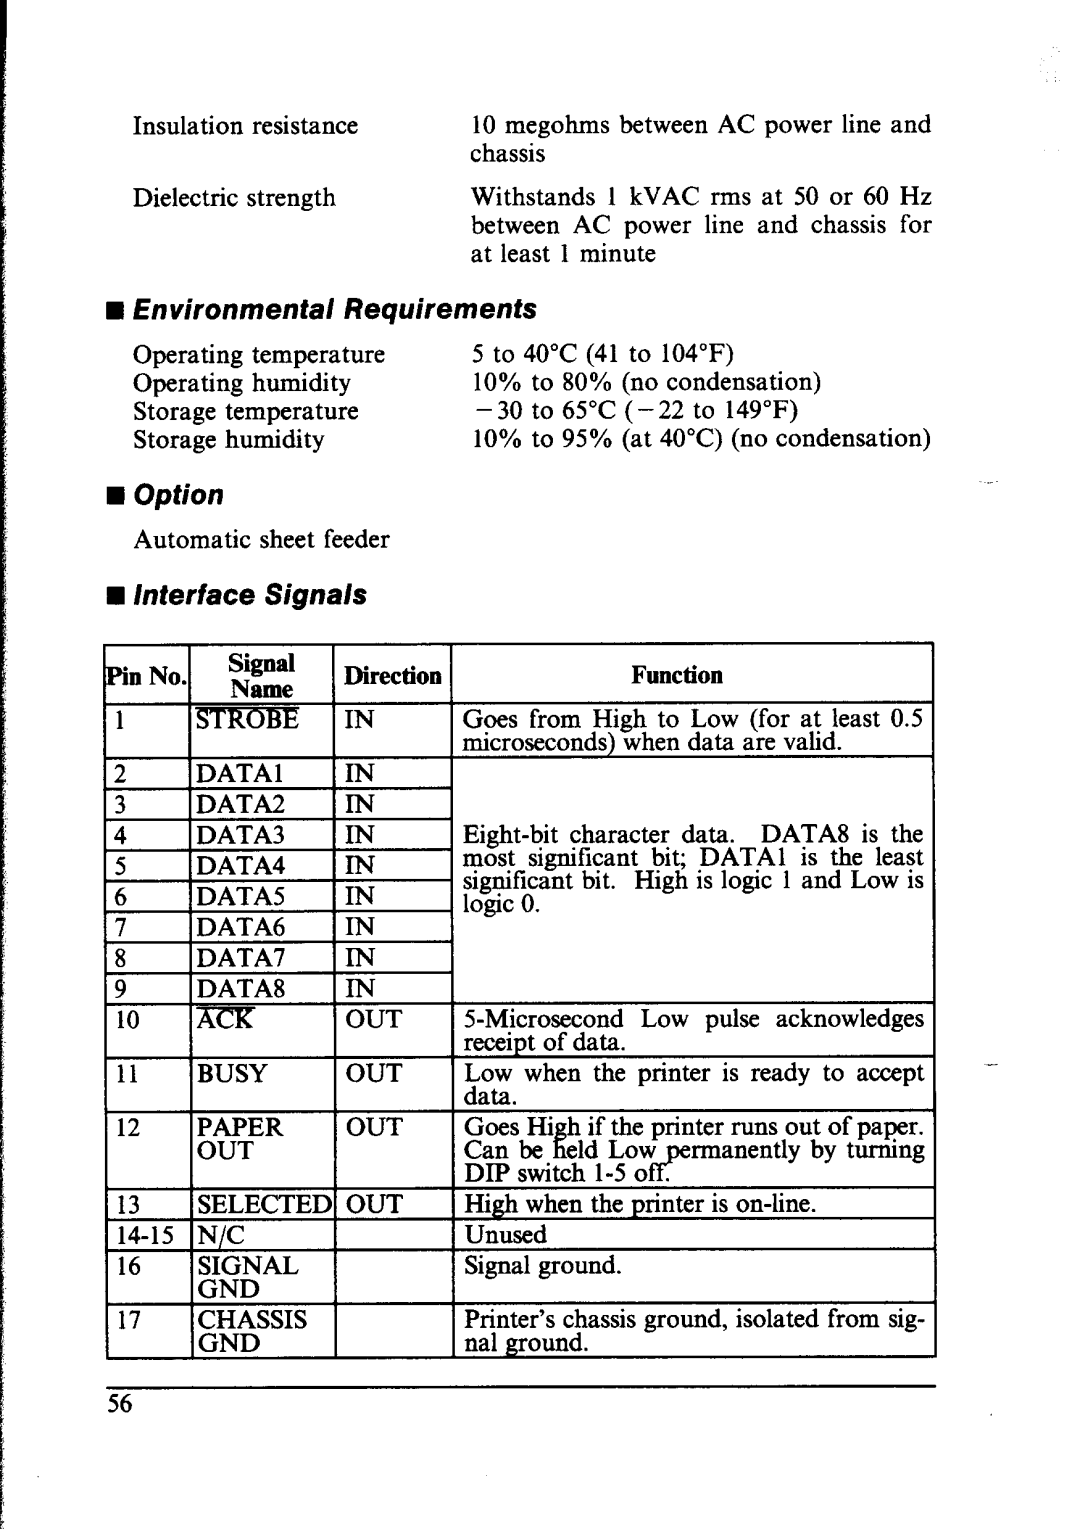 Star Micronics NX-1000 manual n Environmental, Requirements, n Option, n interface Signals 